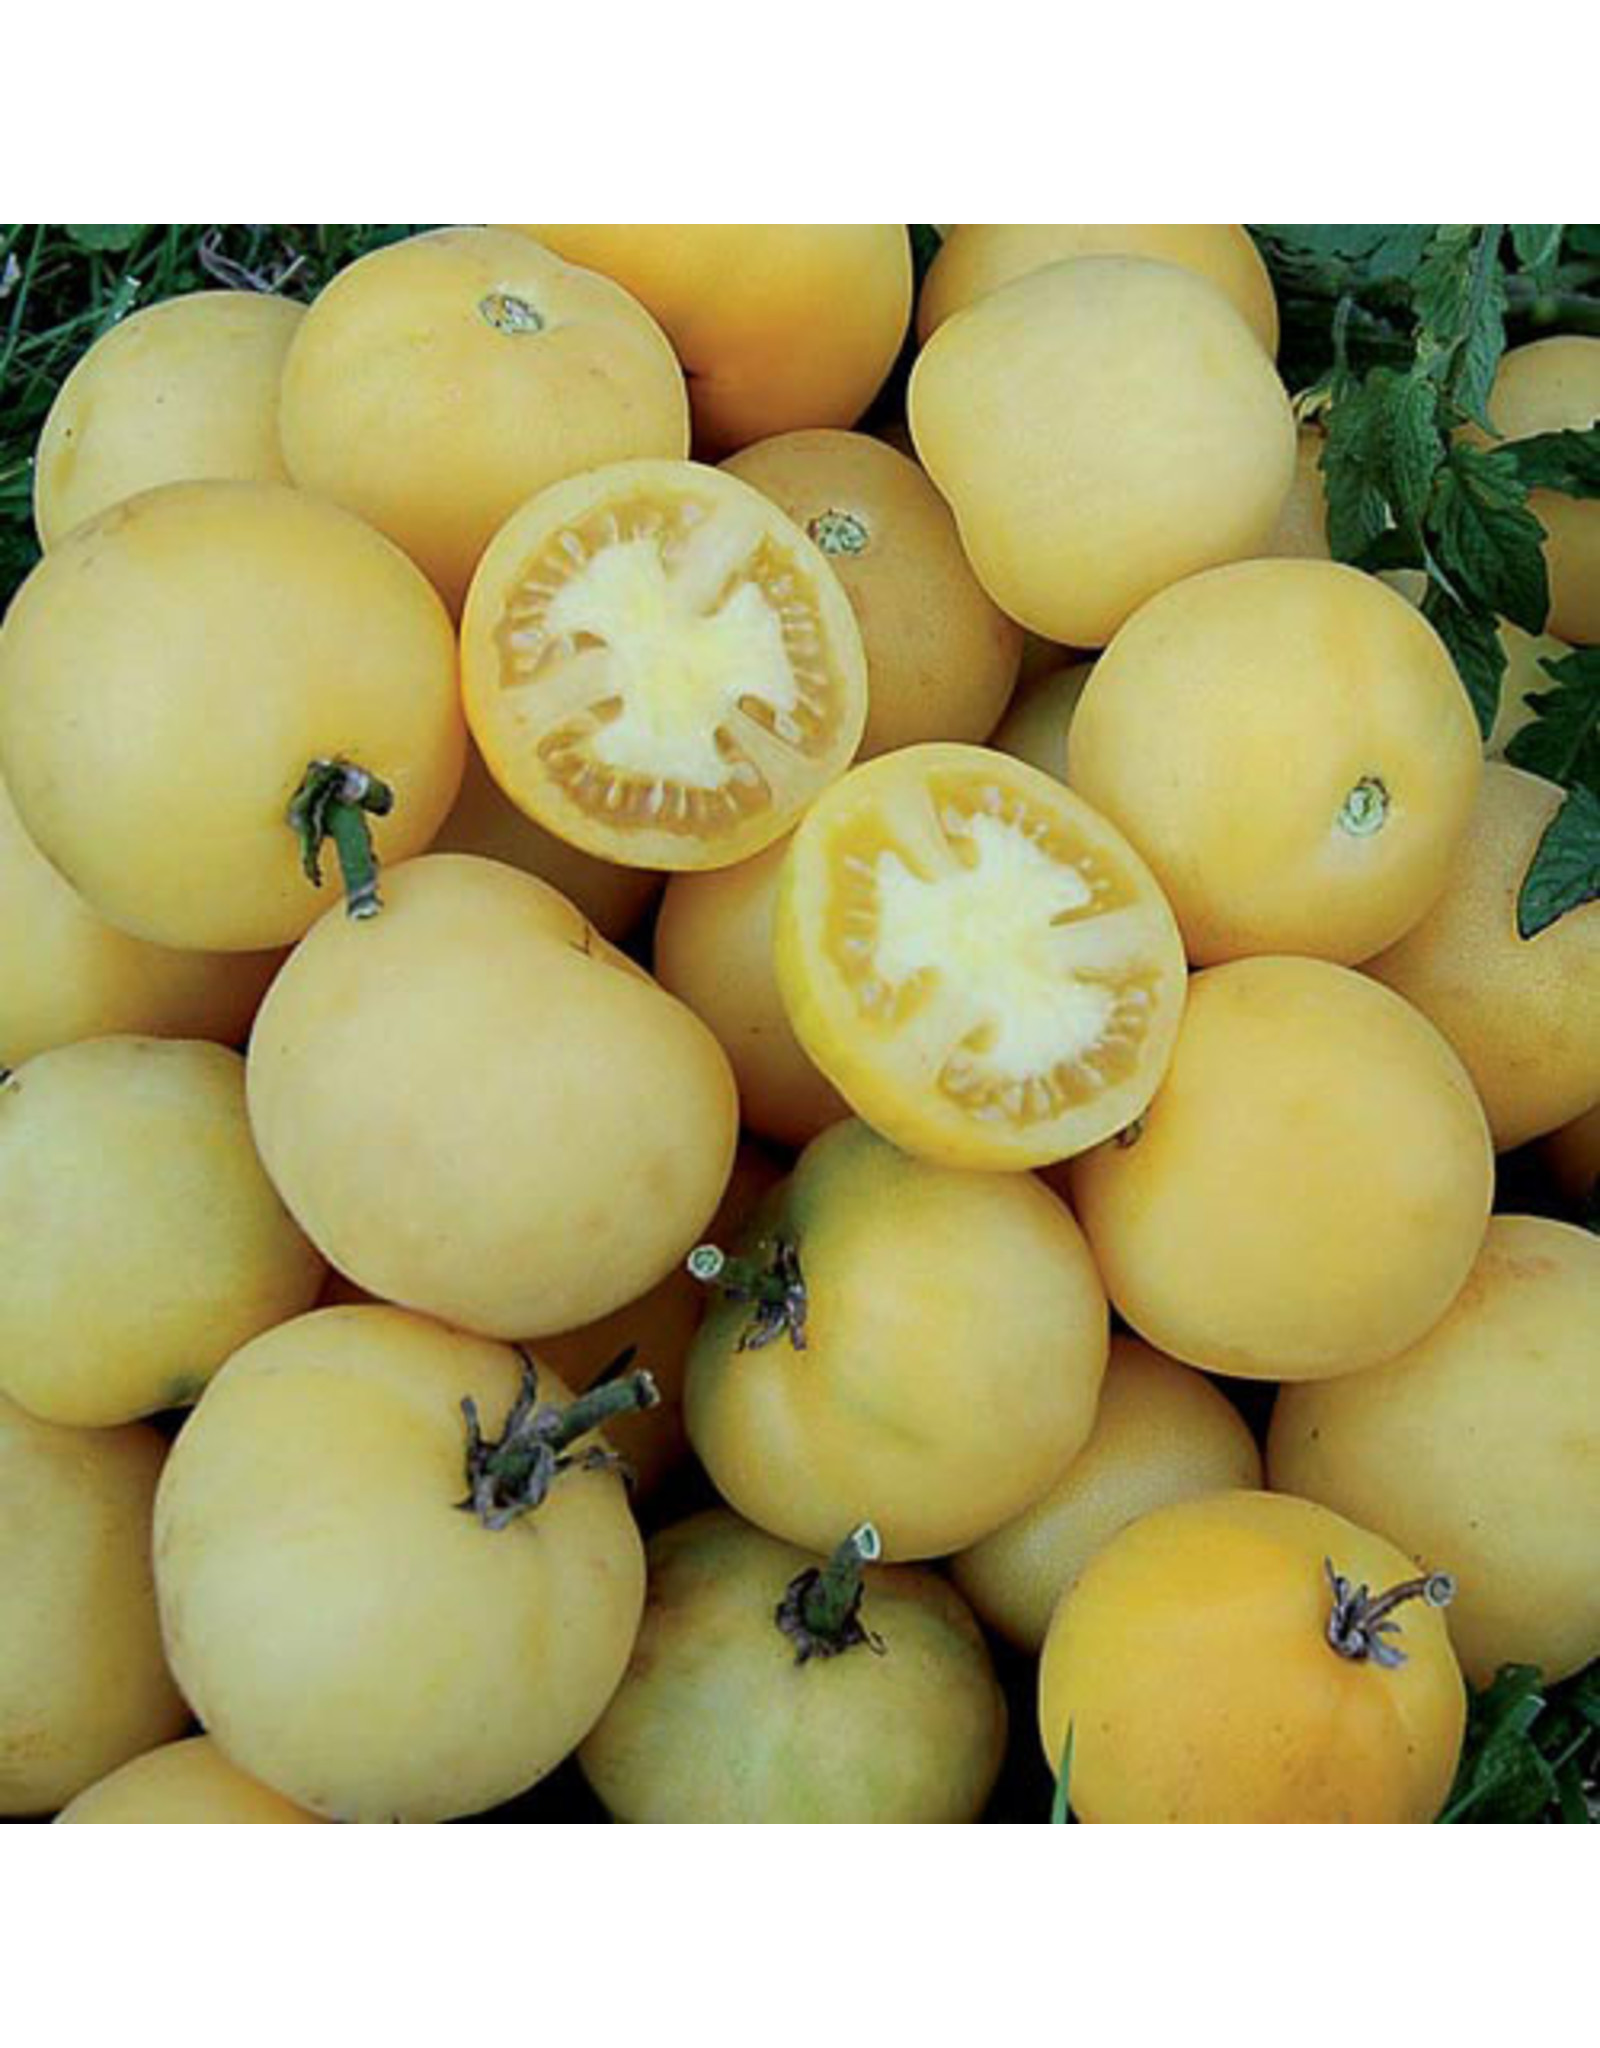 Seed Savers Tomato - Wapsipinicon Peach